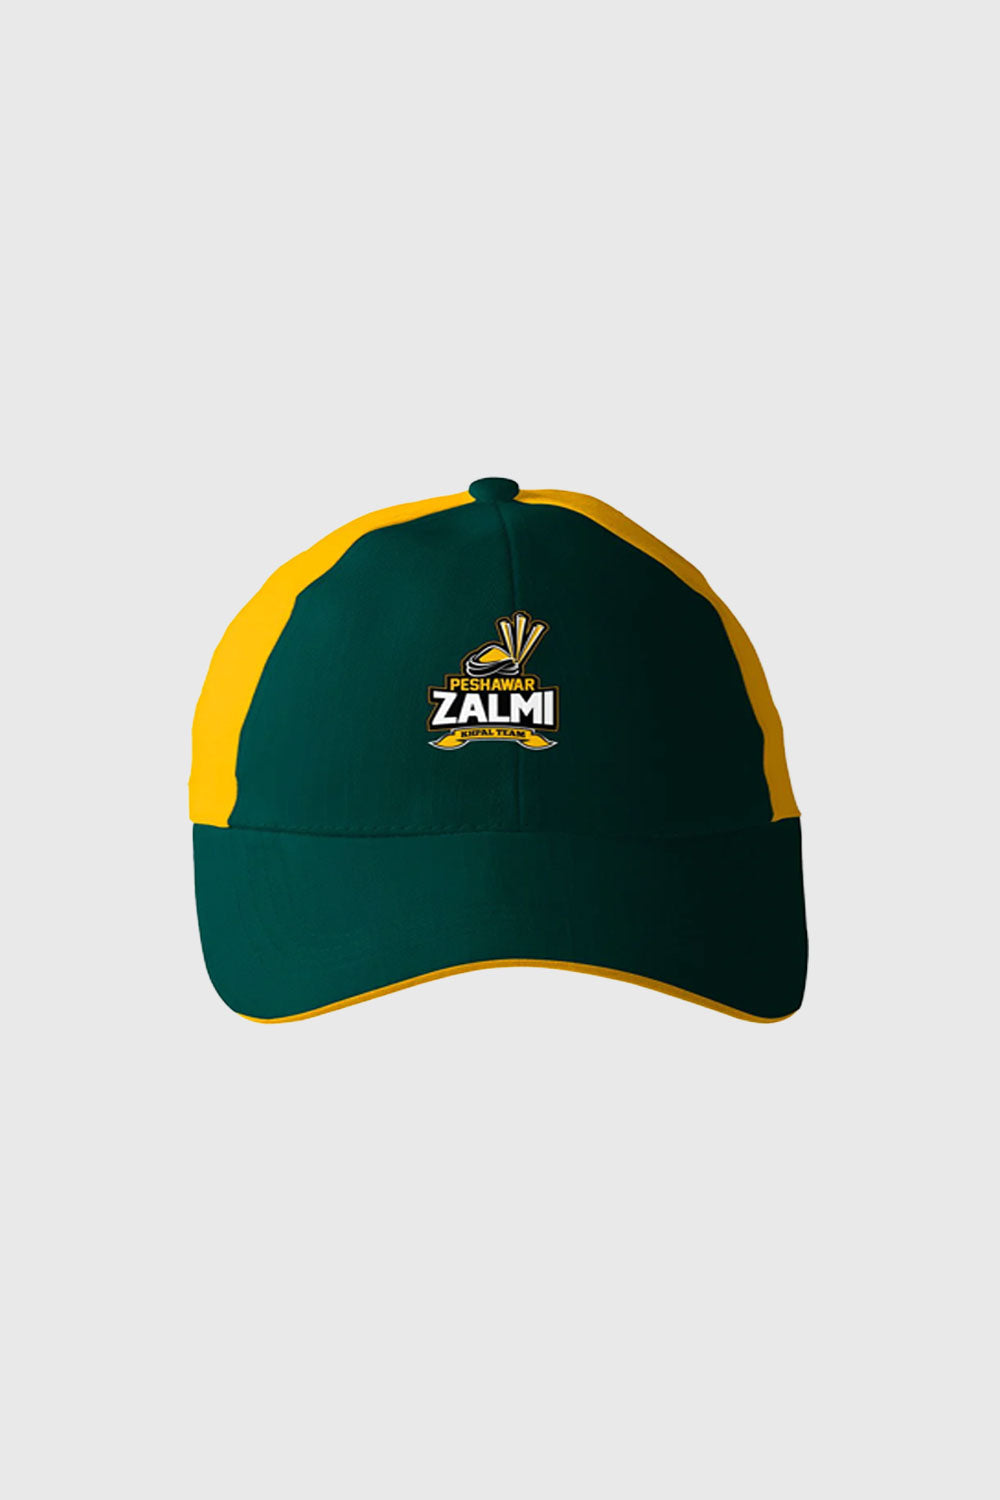 Zalmi Training Cap - PSL 7 by Zalmi Official Kits  Zalmi Store